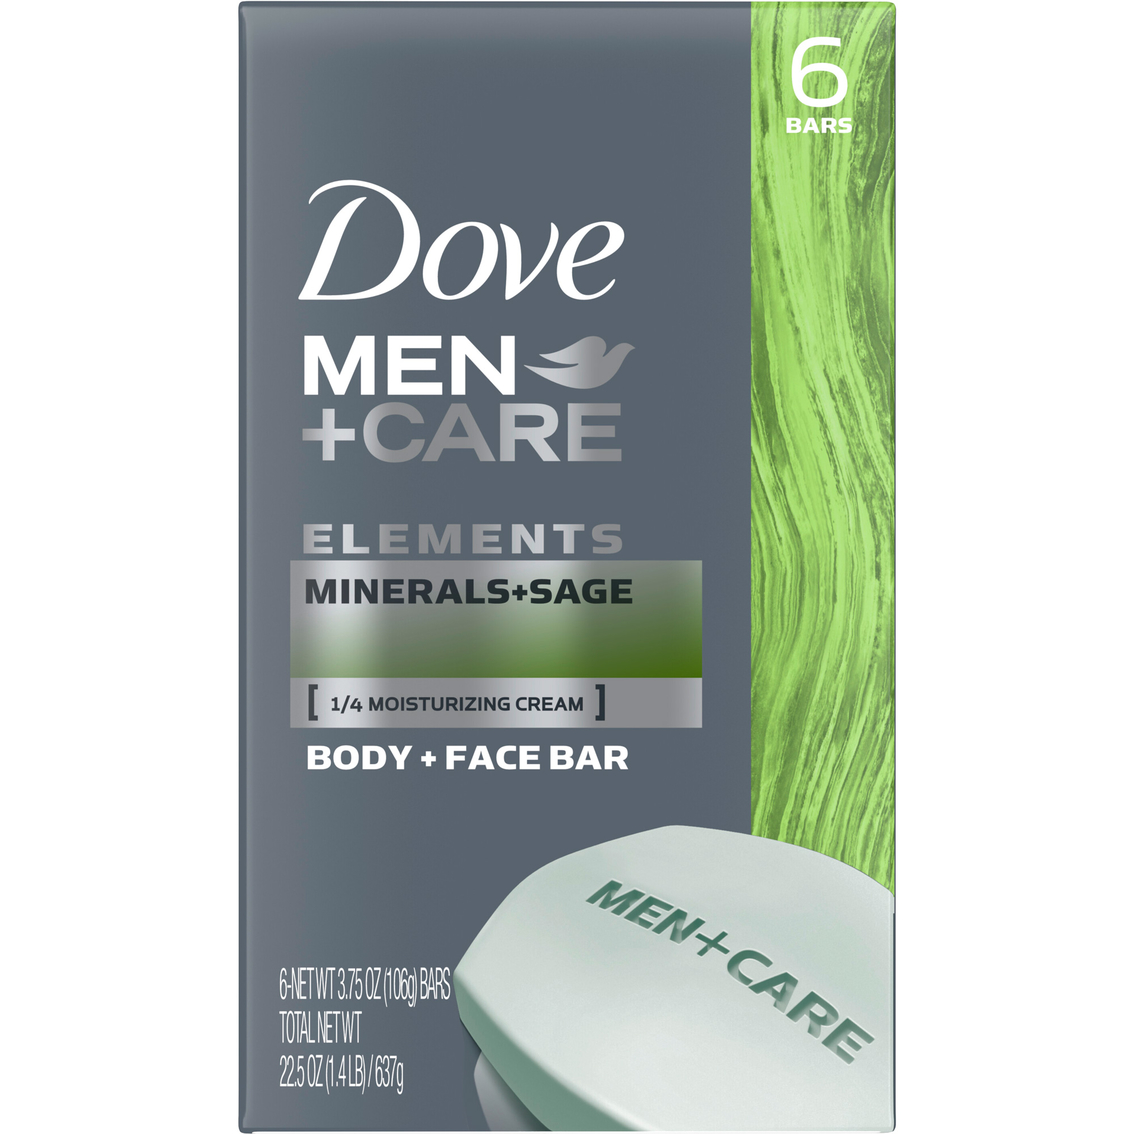 Dove Men+Care Body and Face Bar Minerals + Sage 3.75 oz., 6 Bar